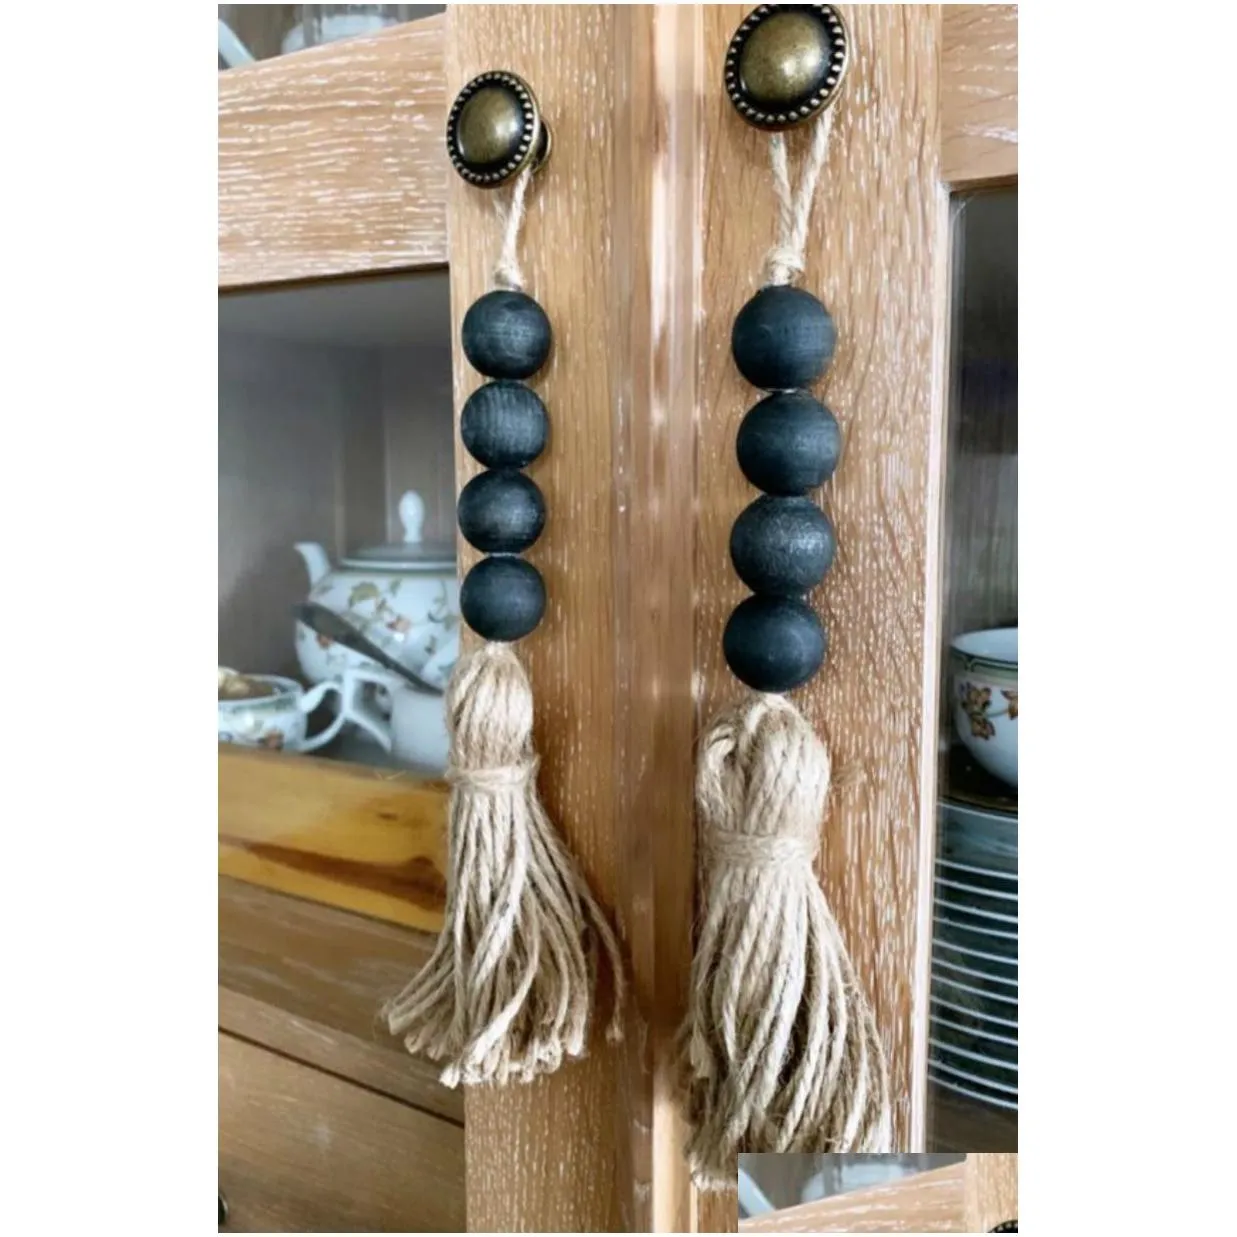 tassle farmhouse beads natural wood bead garland modern farmhouse bead garland bohemian drawer knob decor with jute tassel m2998